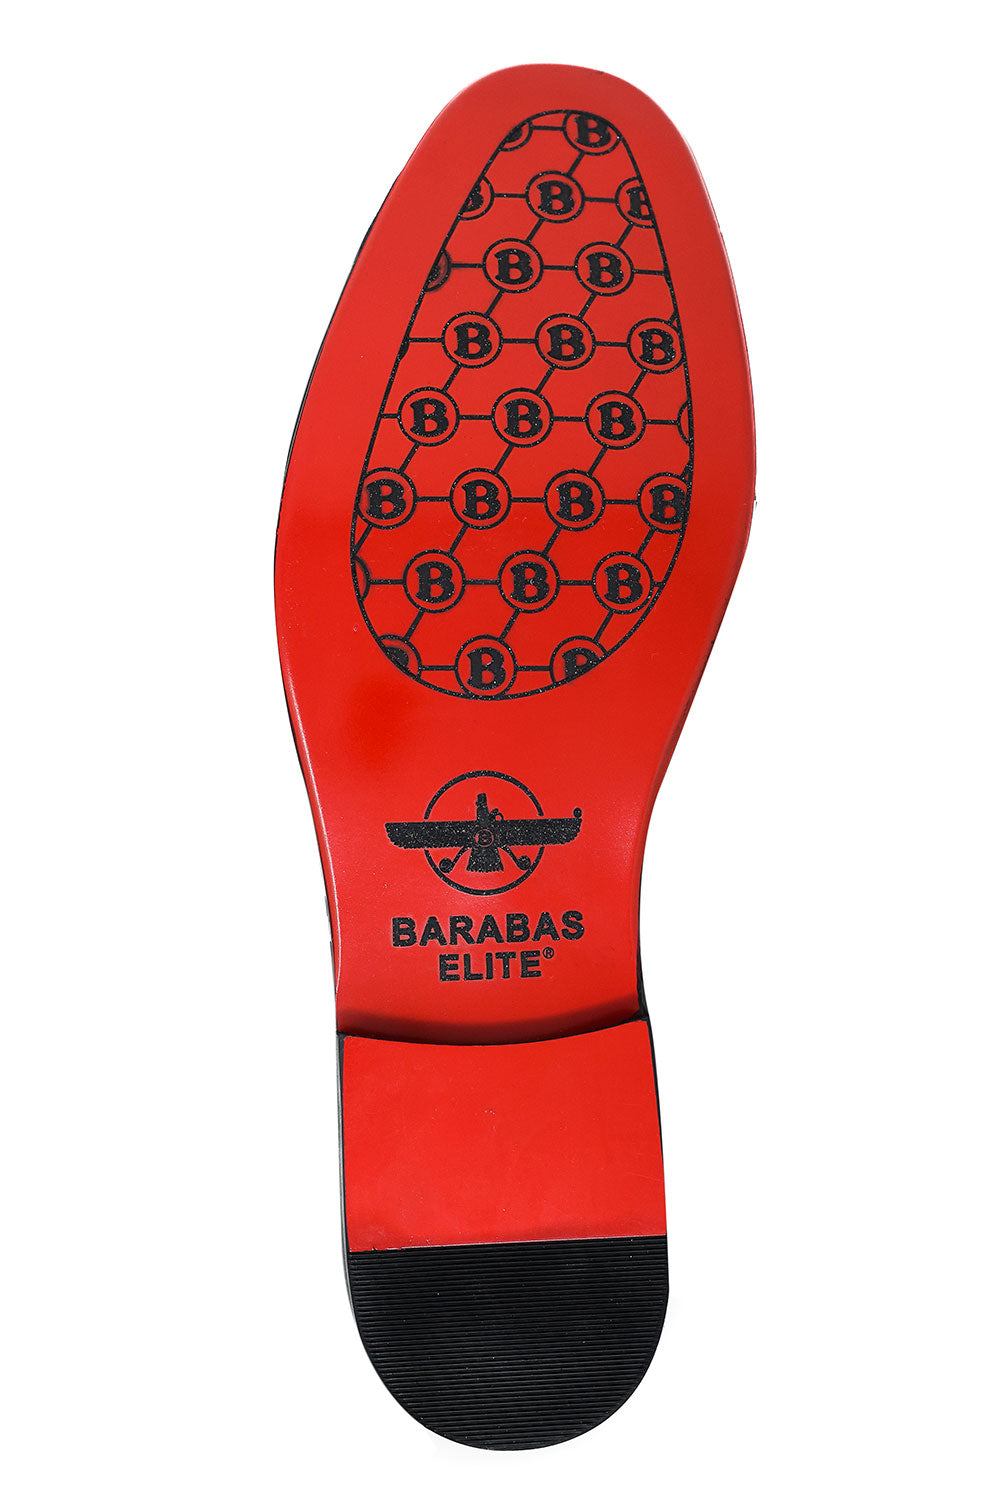 Barabas Men's Rhinestone Slip On Dress Loafer Red Sole Shoes 2ESH7